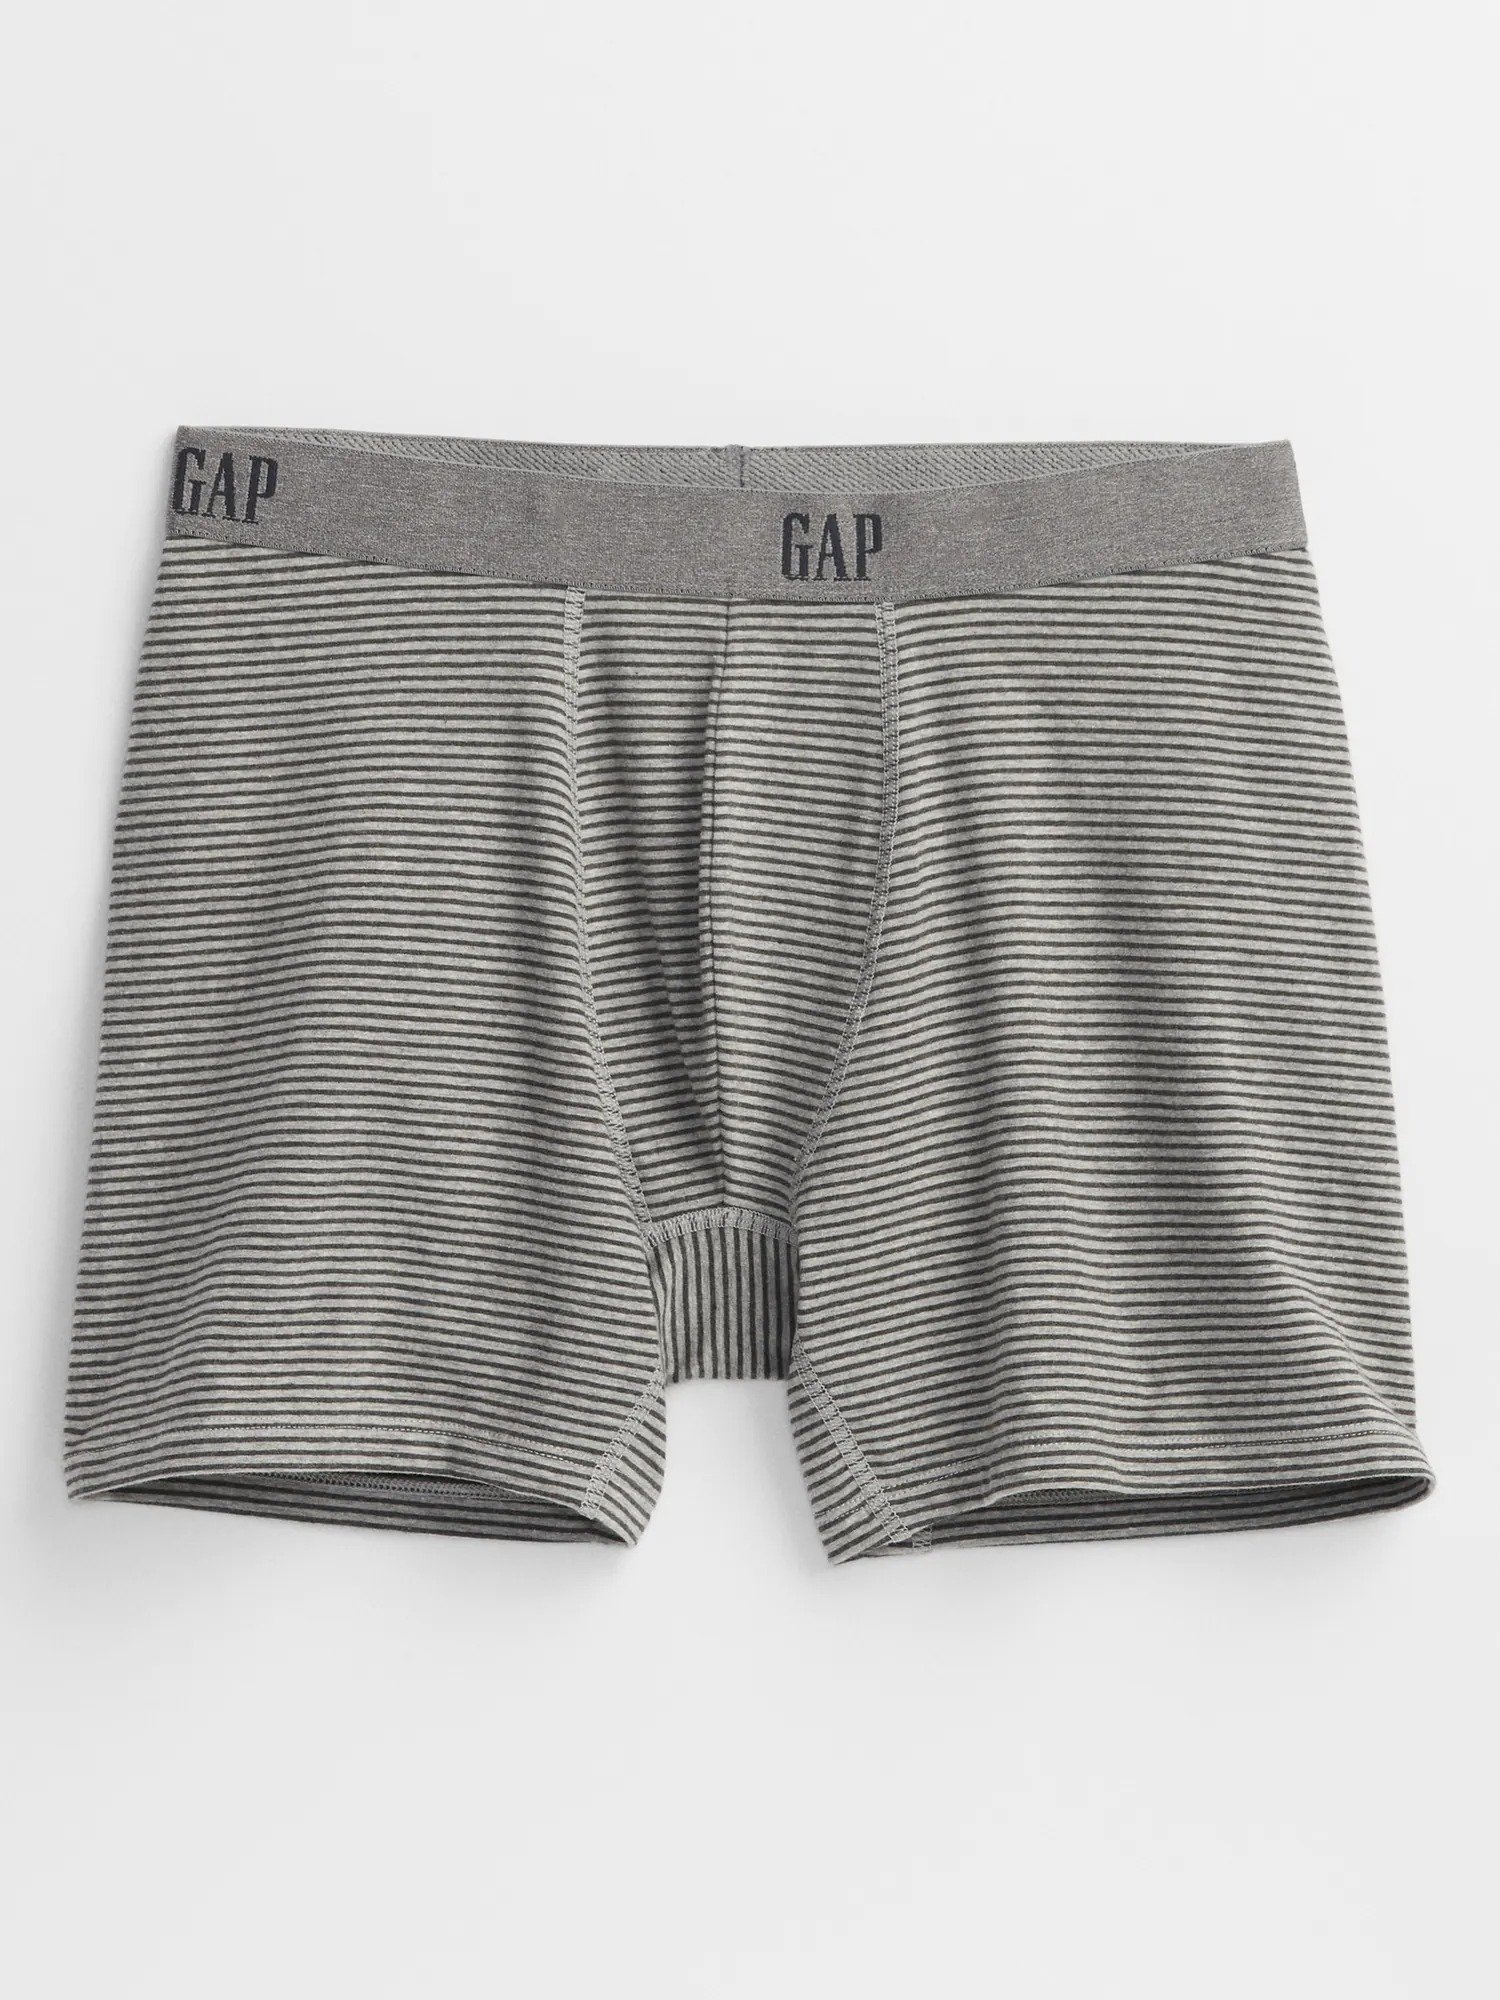 Gap Logo Baskılı Boxer Külot product image